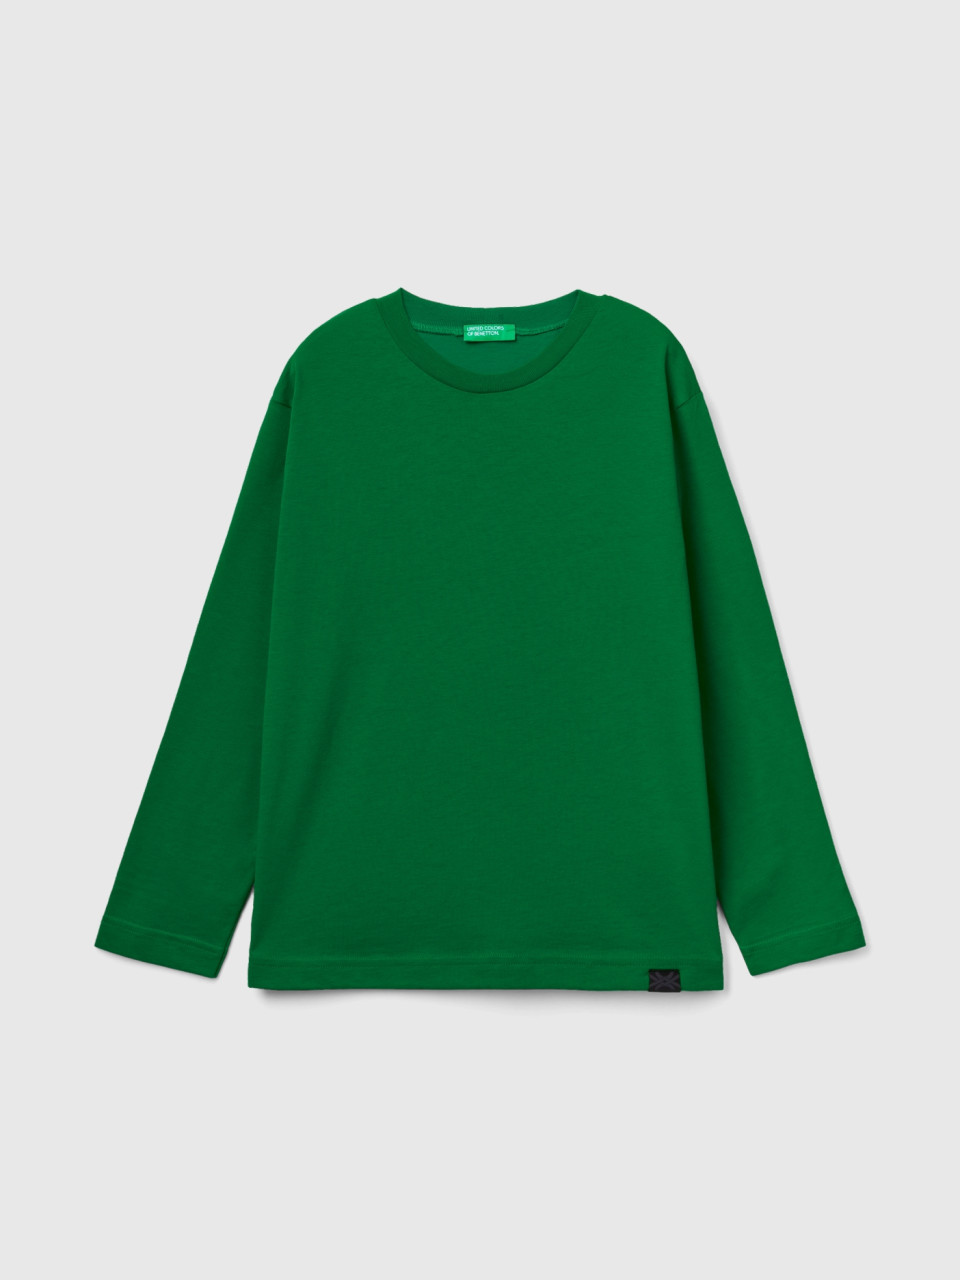 Benetton, 100% Organic Cotton Crew Neck T-shirt, Green, Kids